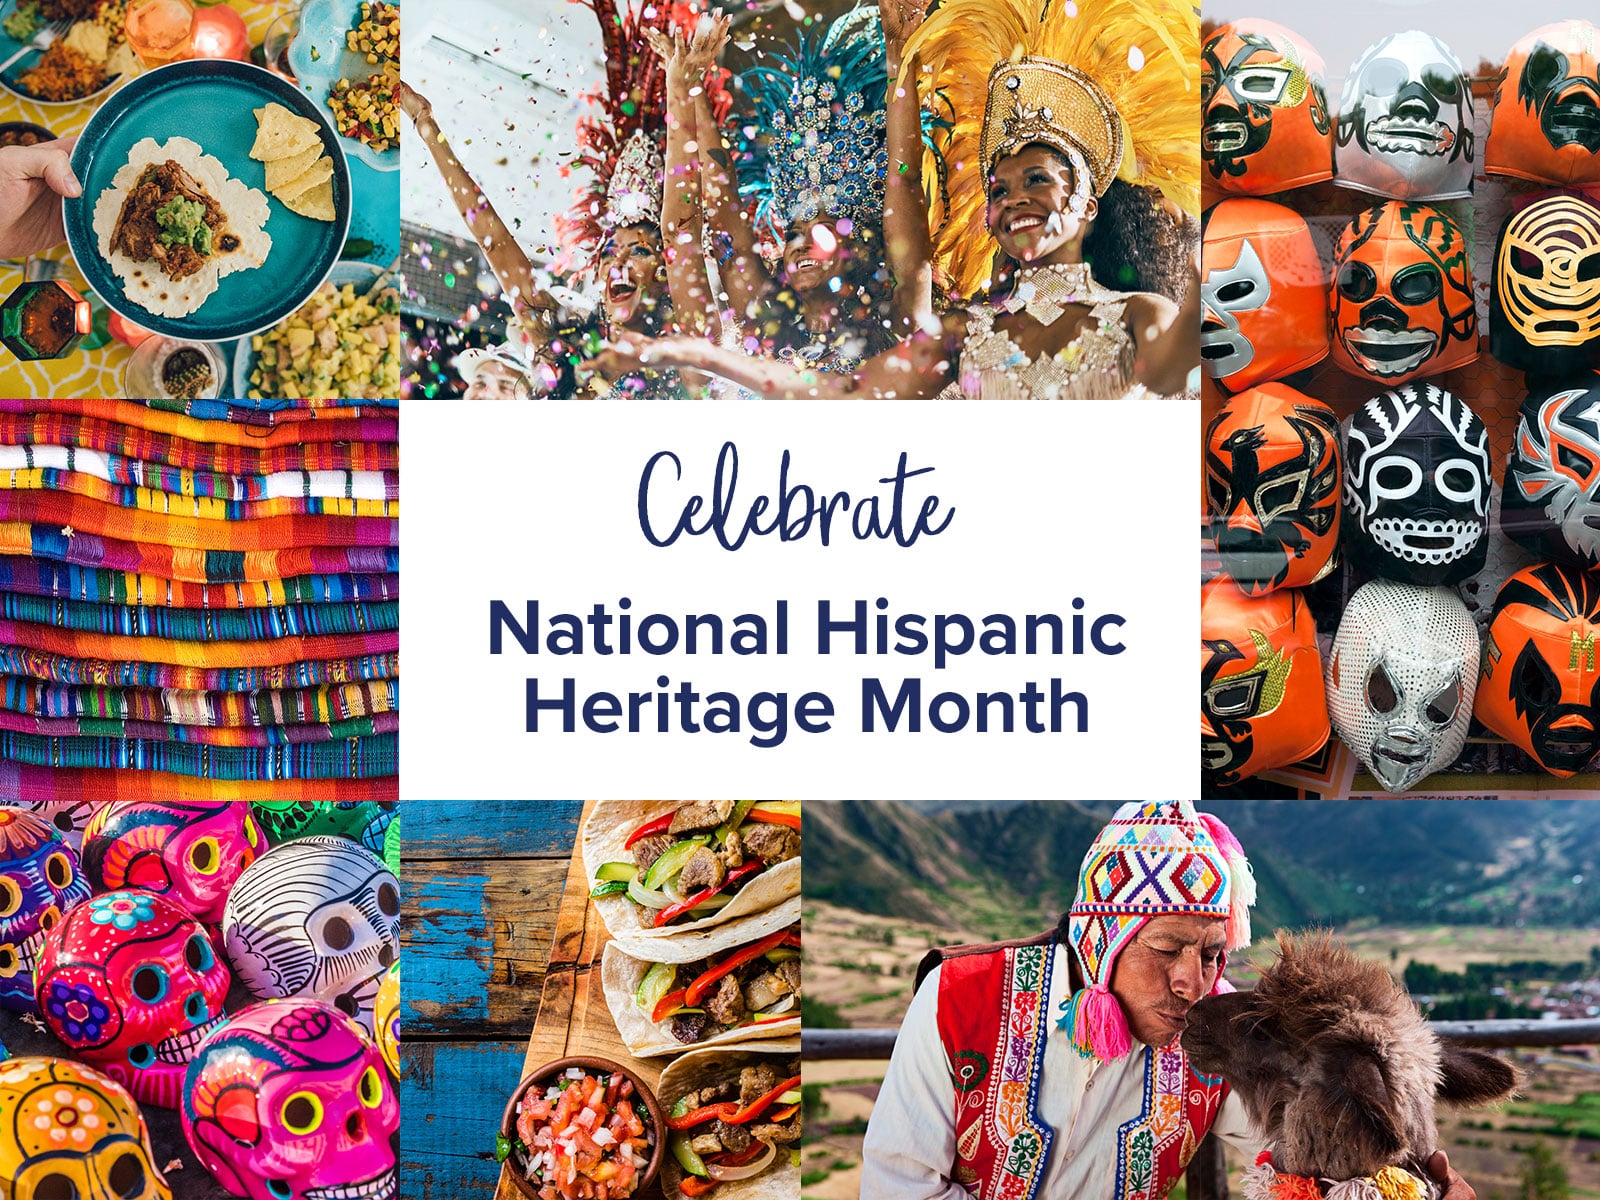 We're celebrating Hispanic Heritage Month on Friday, September